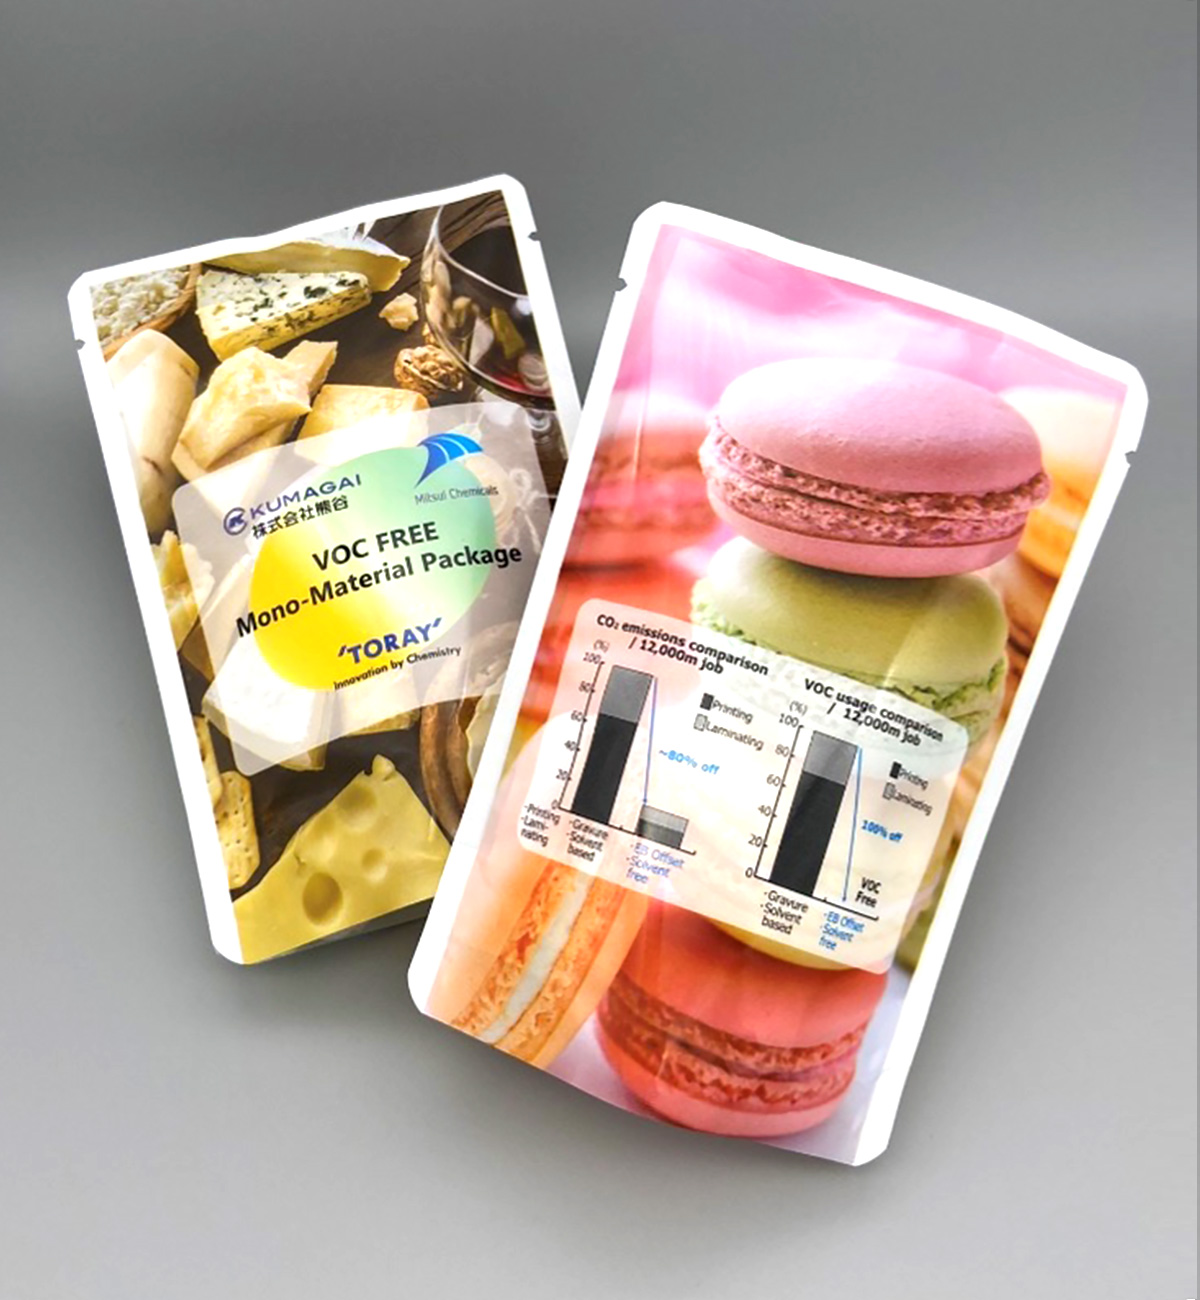 Mono-material packaging film